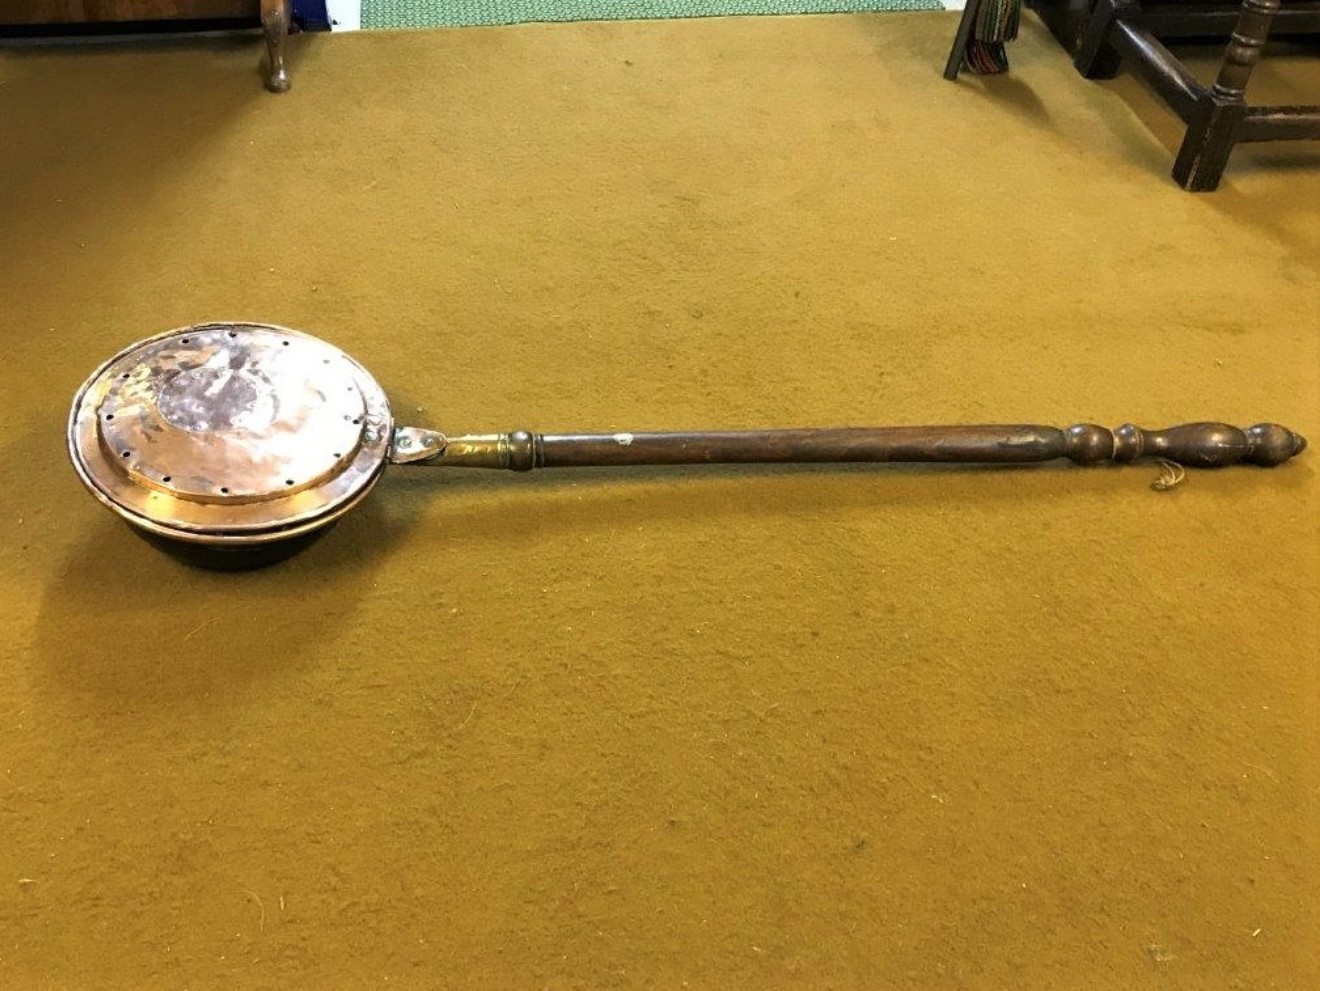 Antique Copper Bed Warming Pan